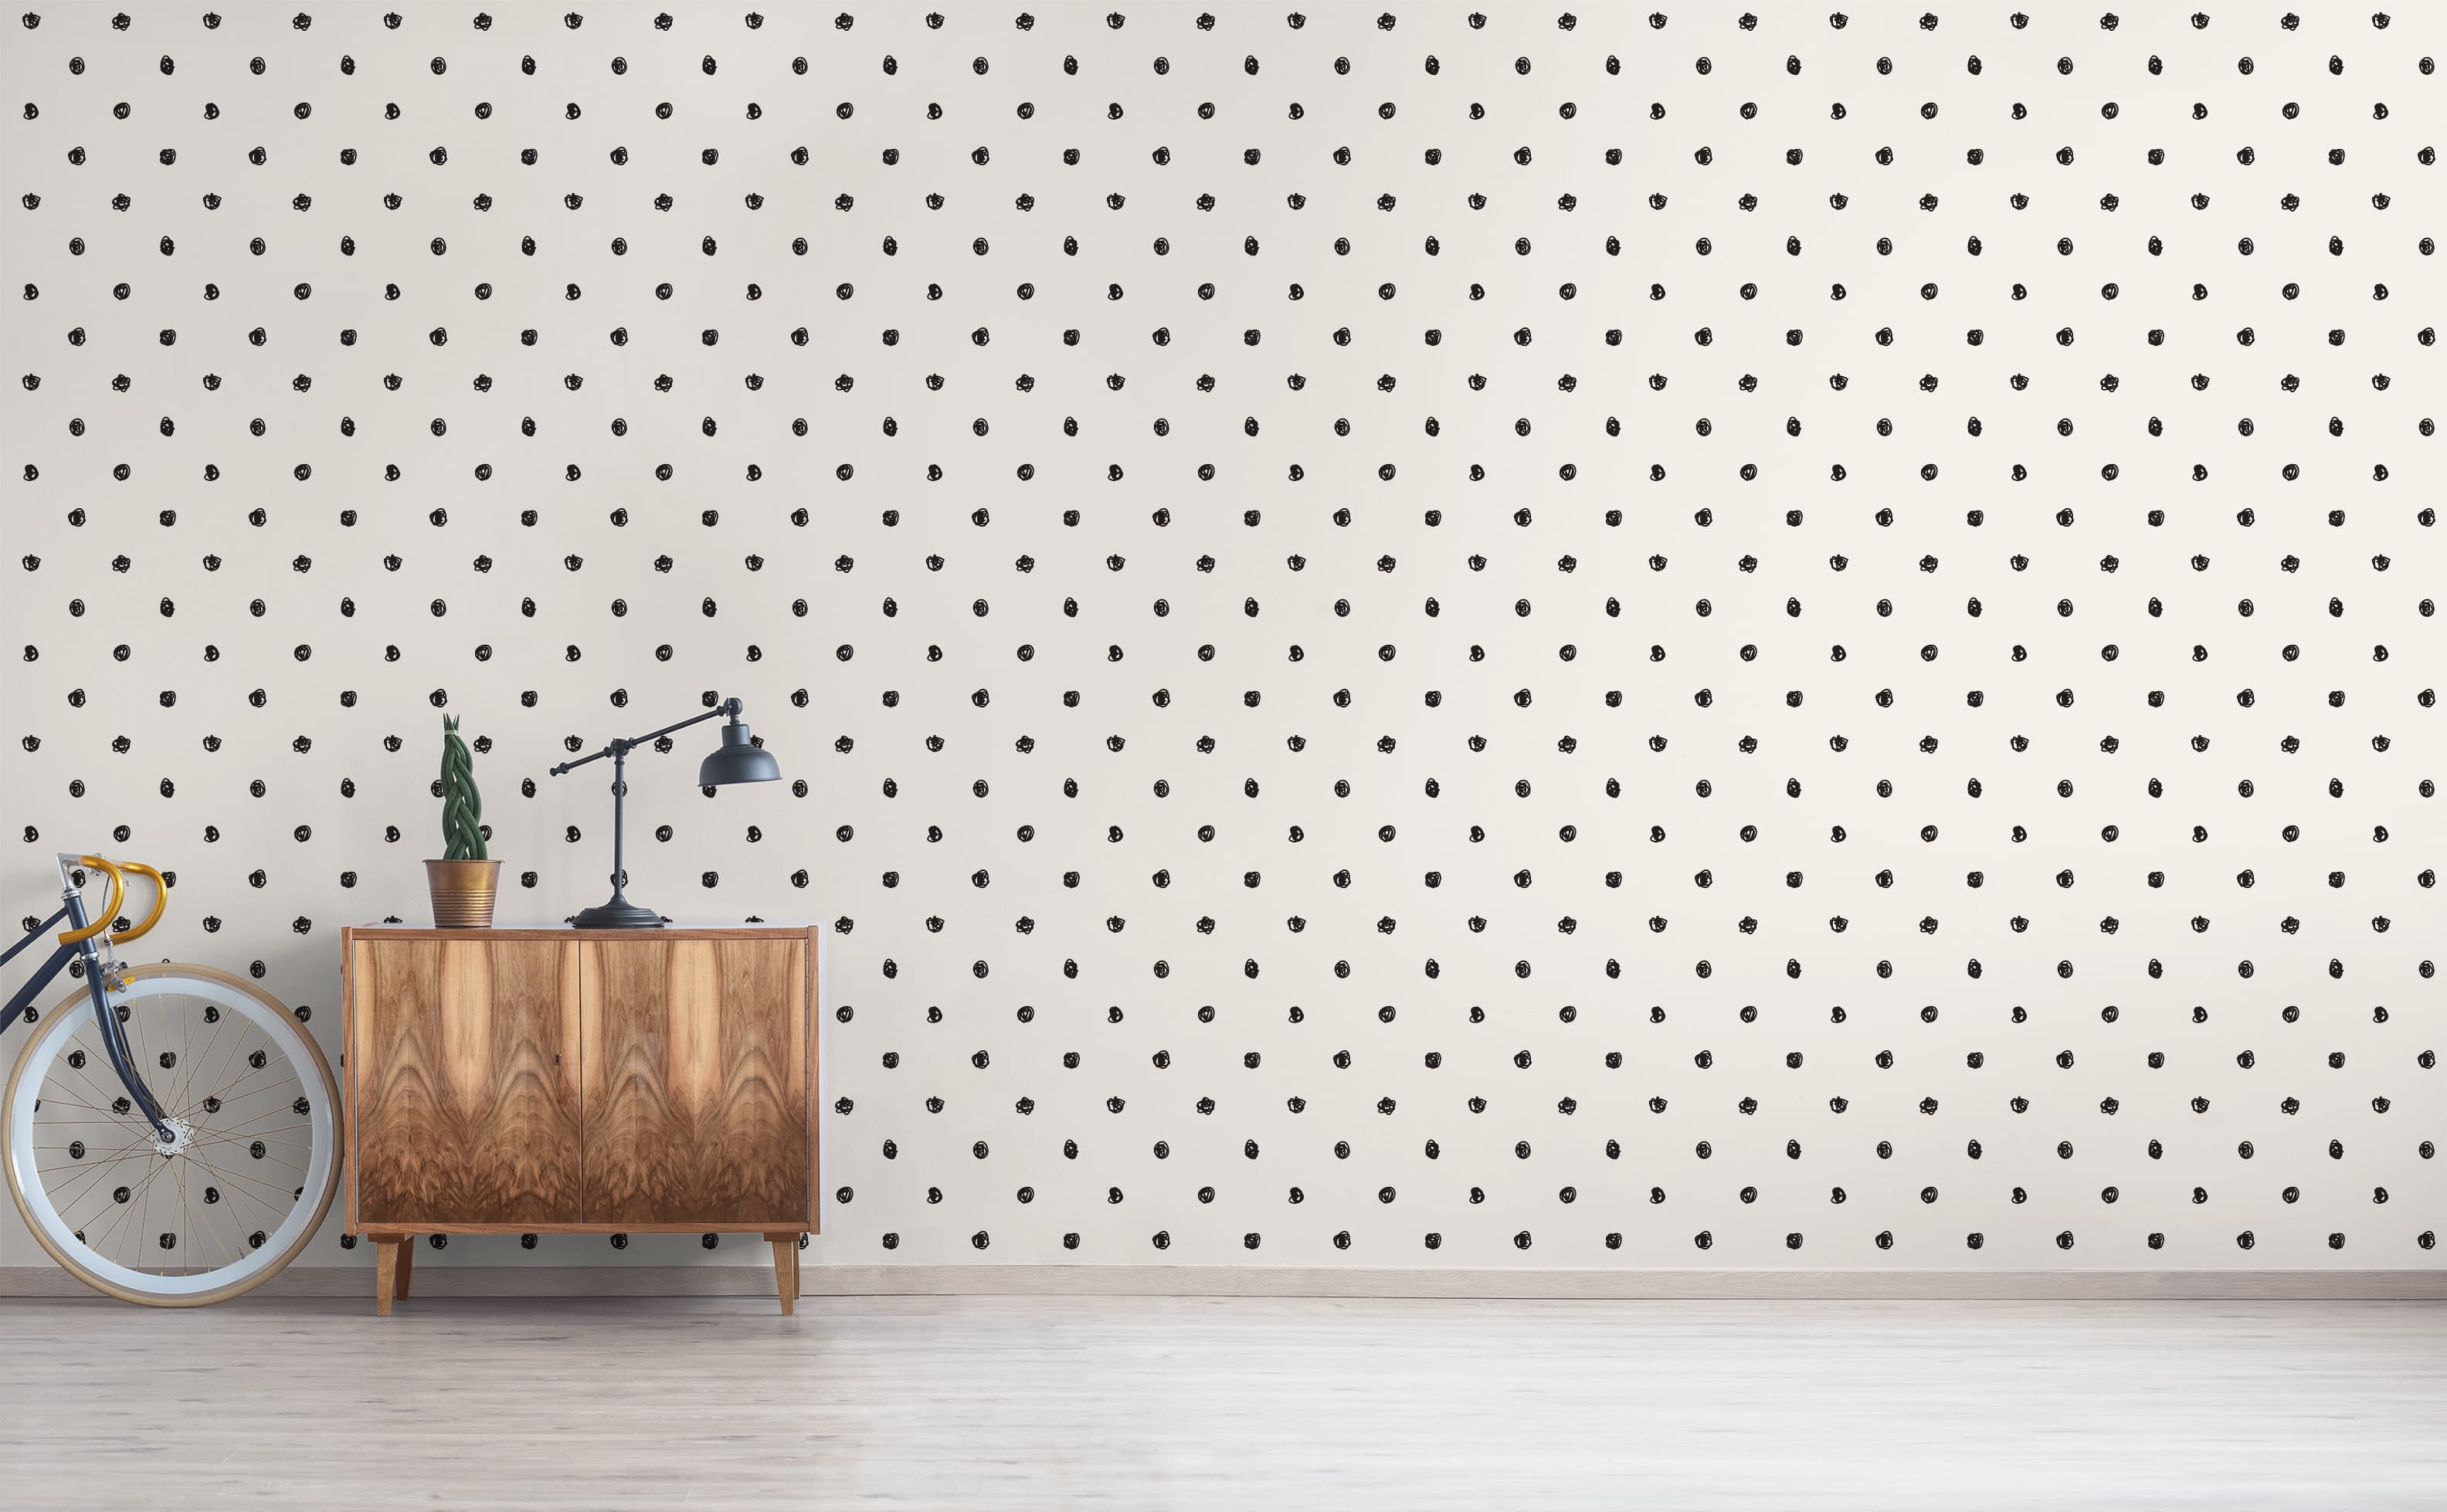 black polka dots wallpaper